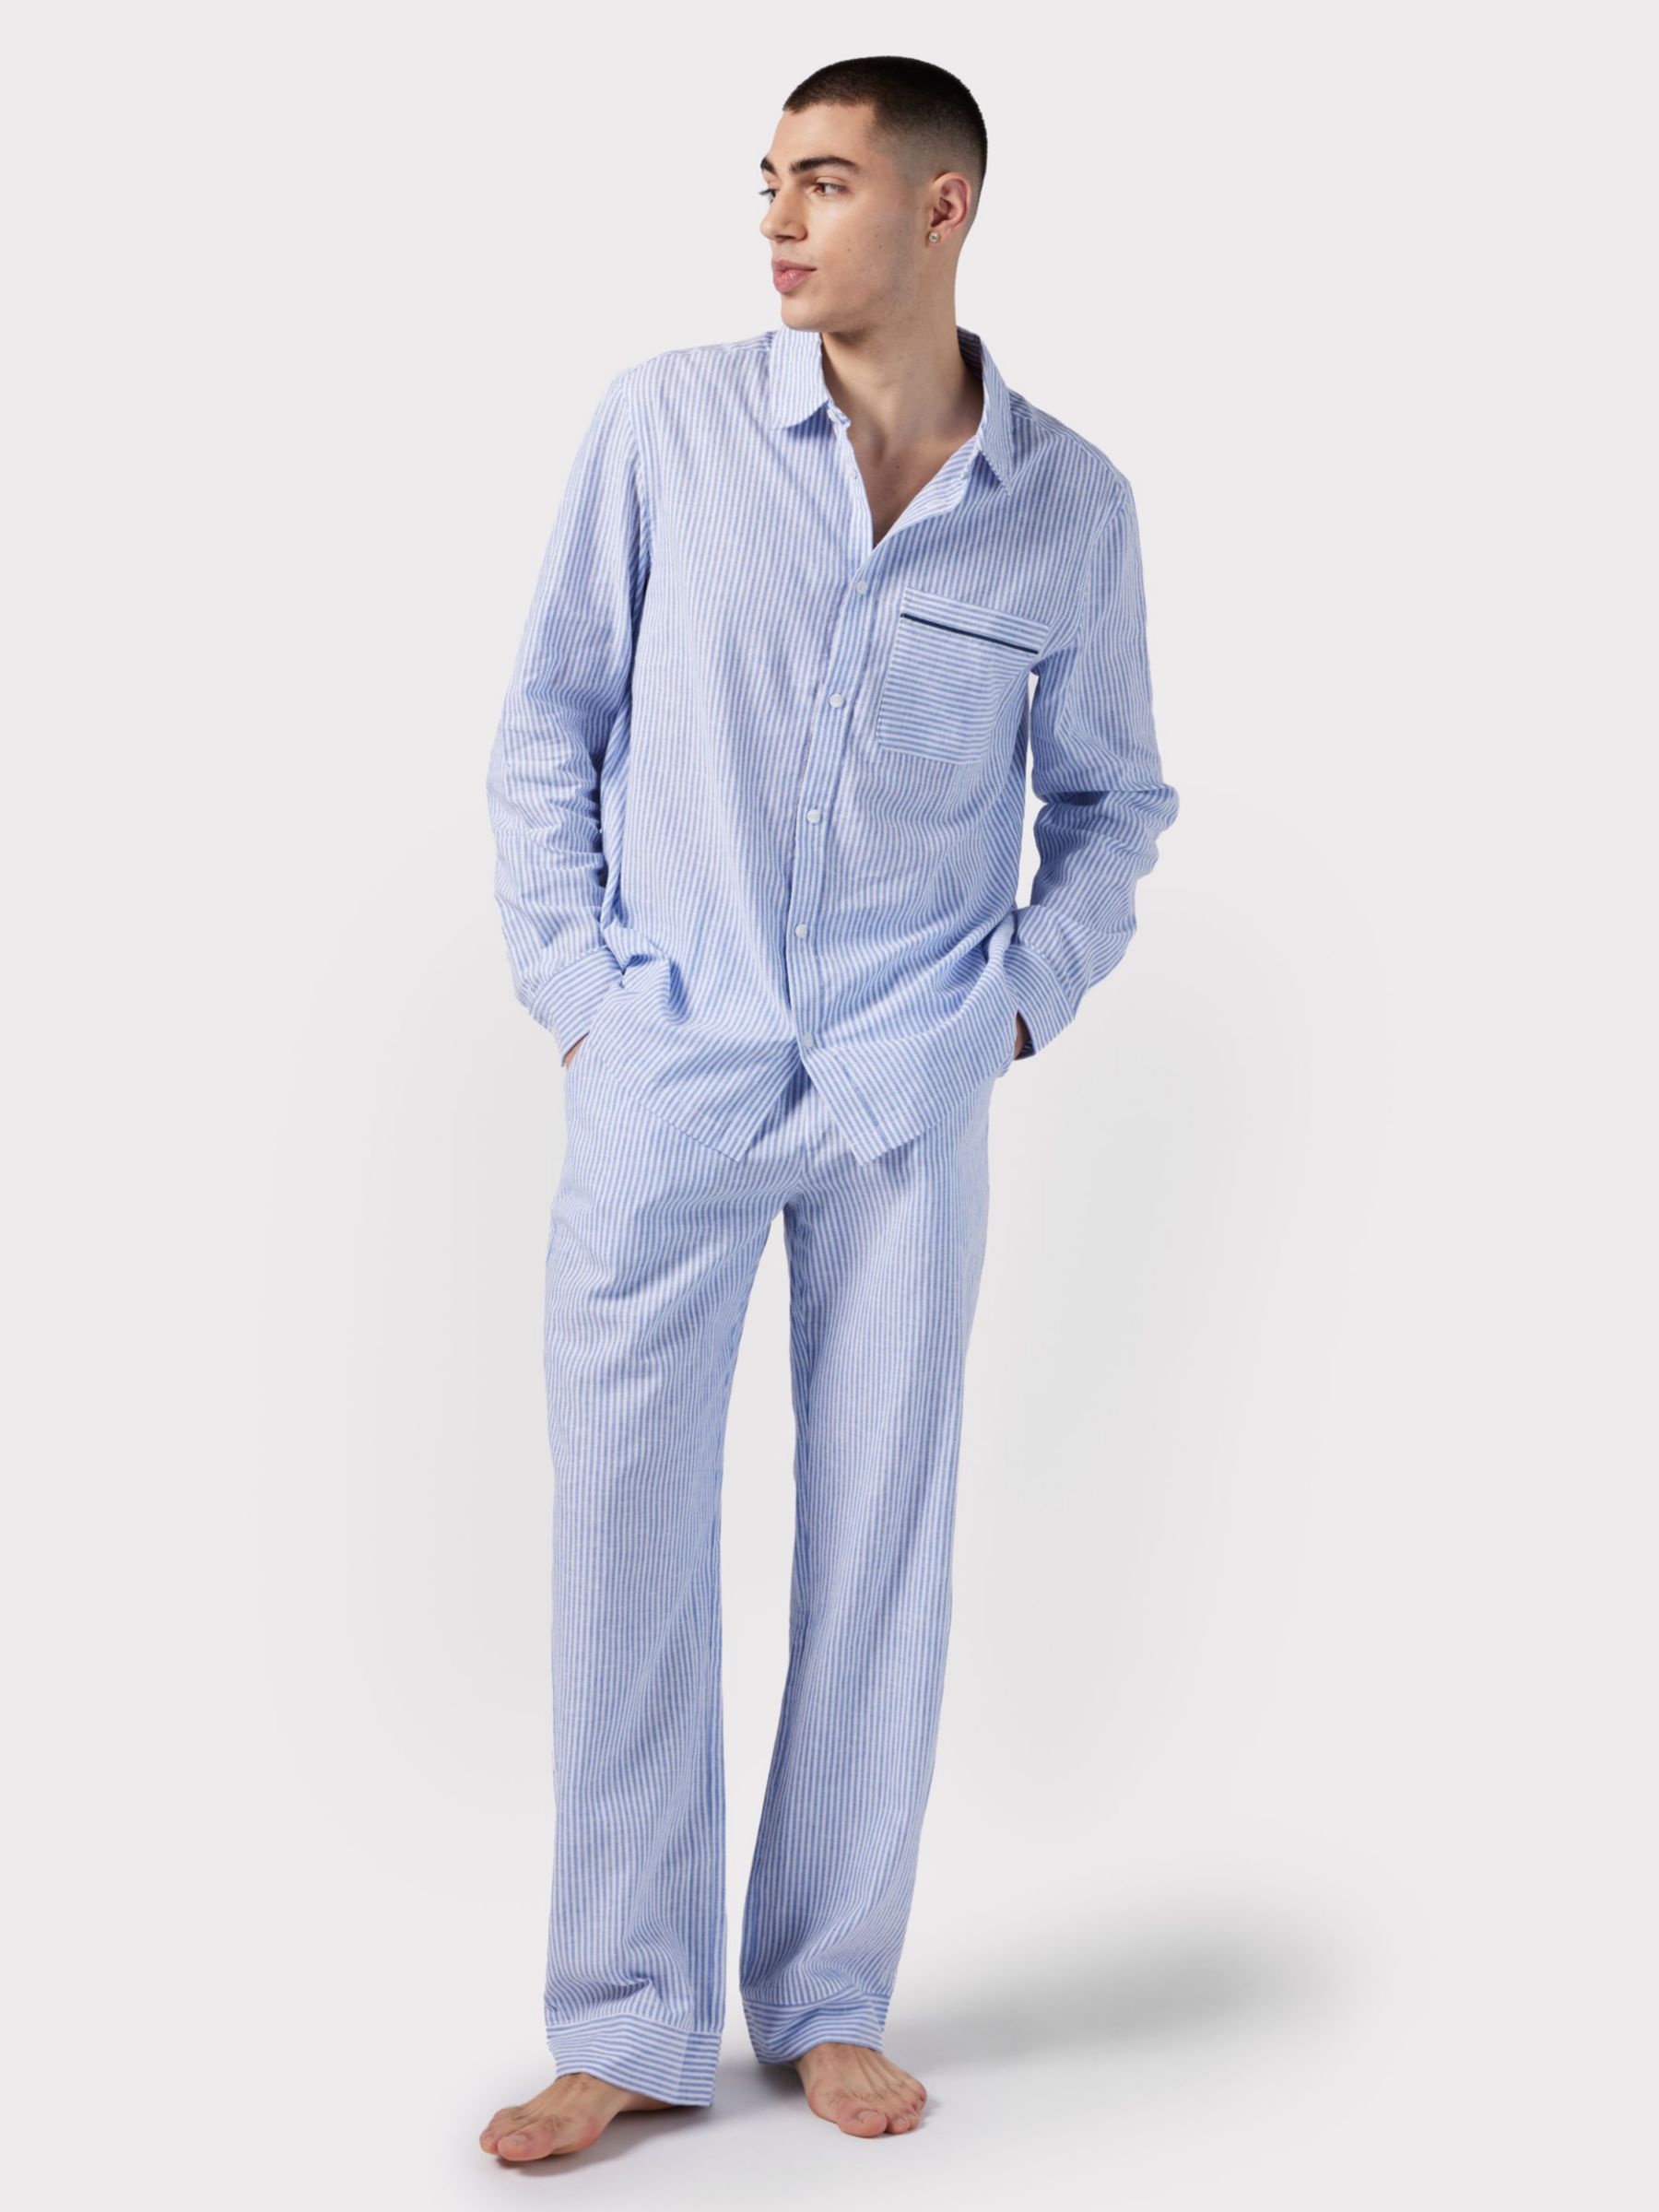 Buy Chelsea Peers Linen Blend Poplin Stripe Pyjama Bottoms, Navy/White Online at johnlewis.com